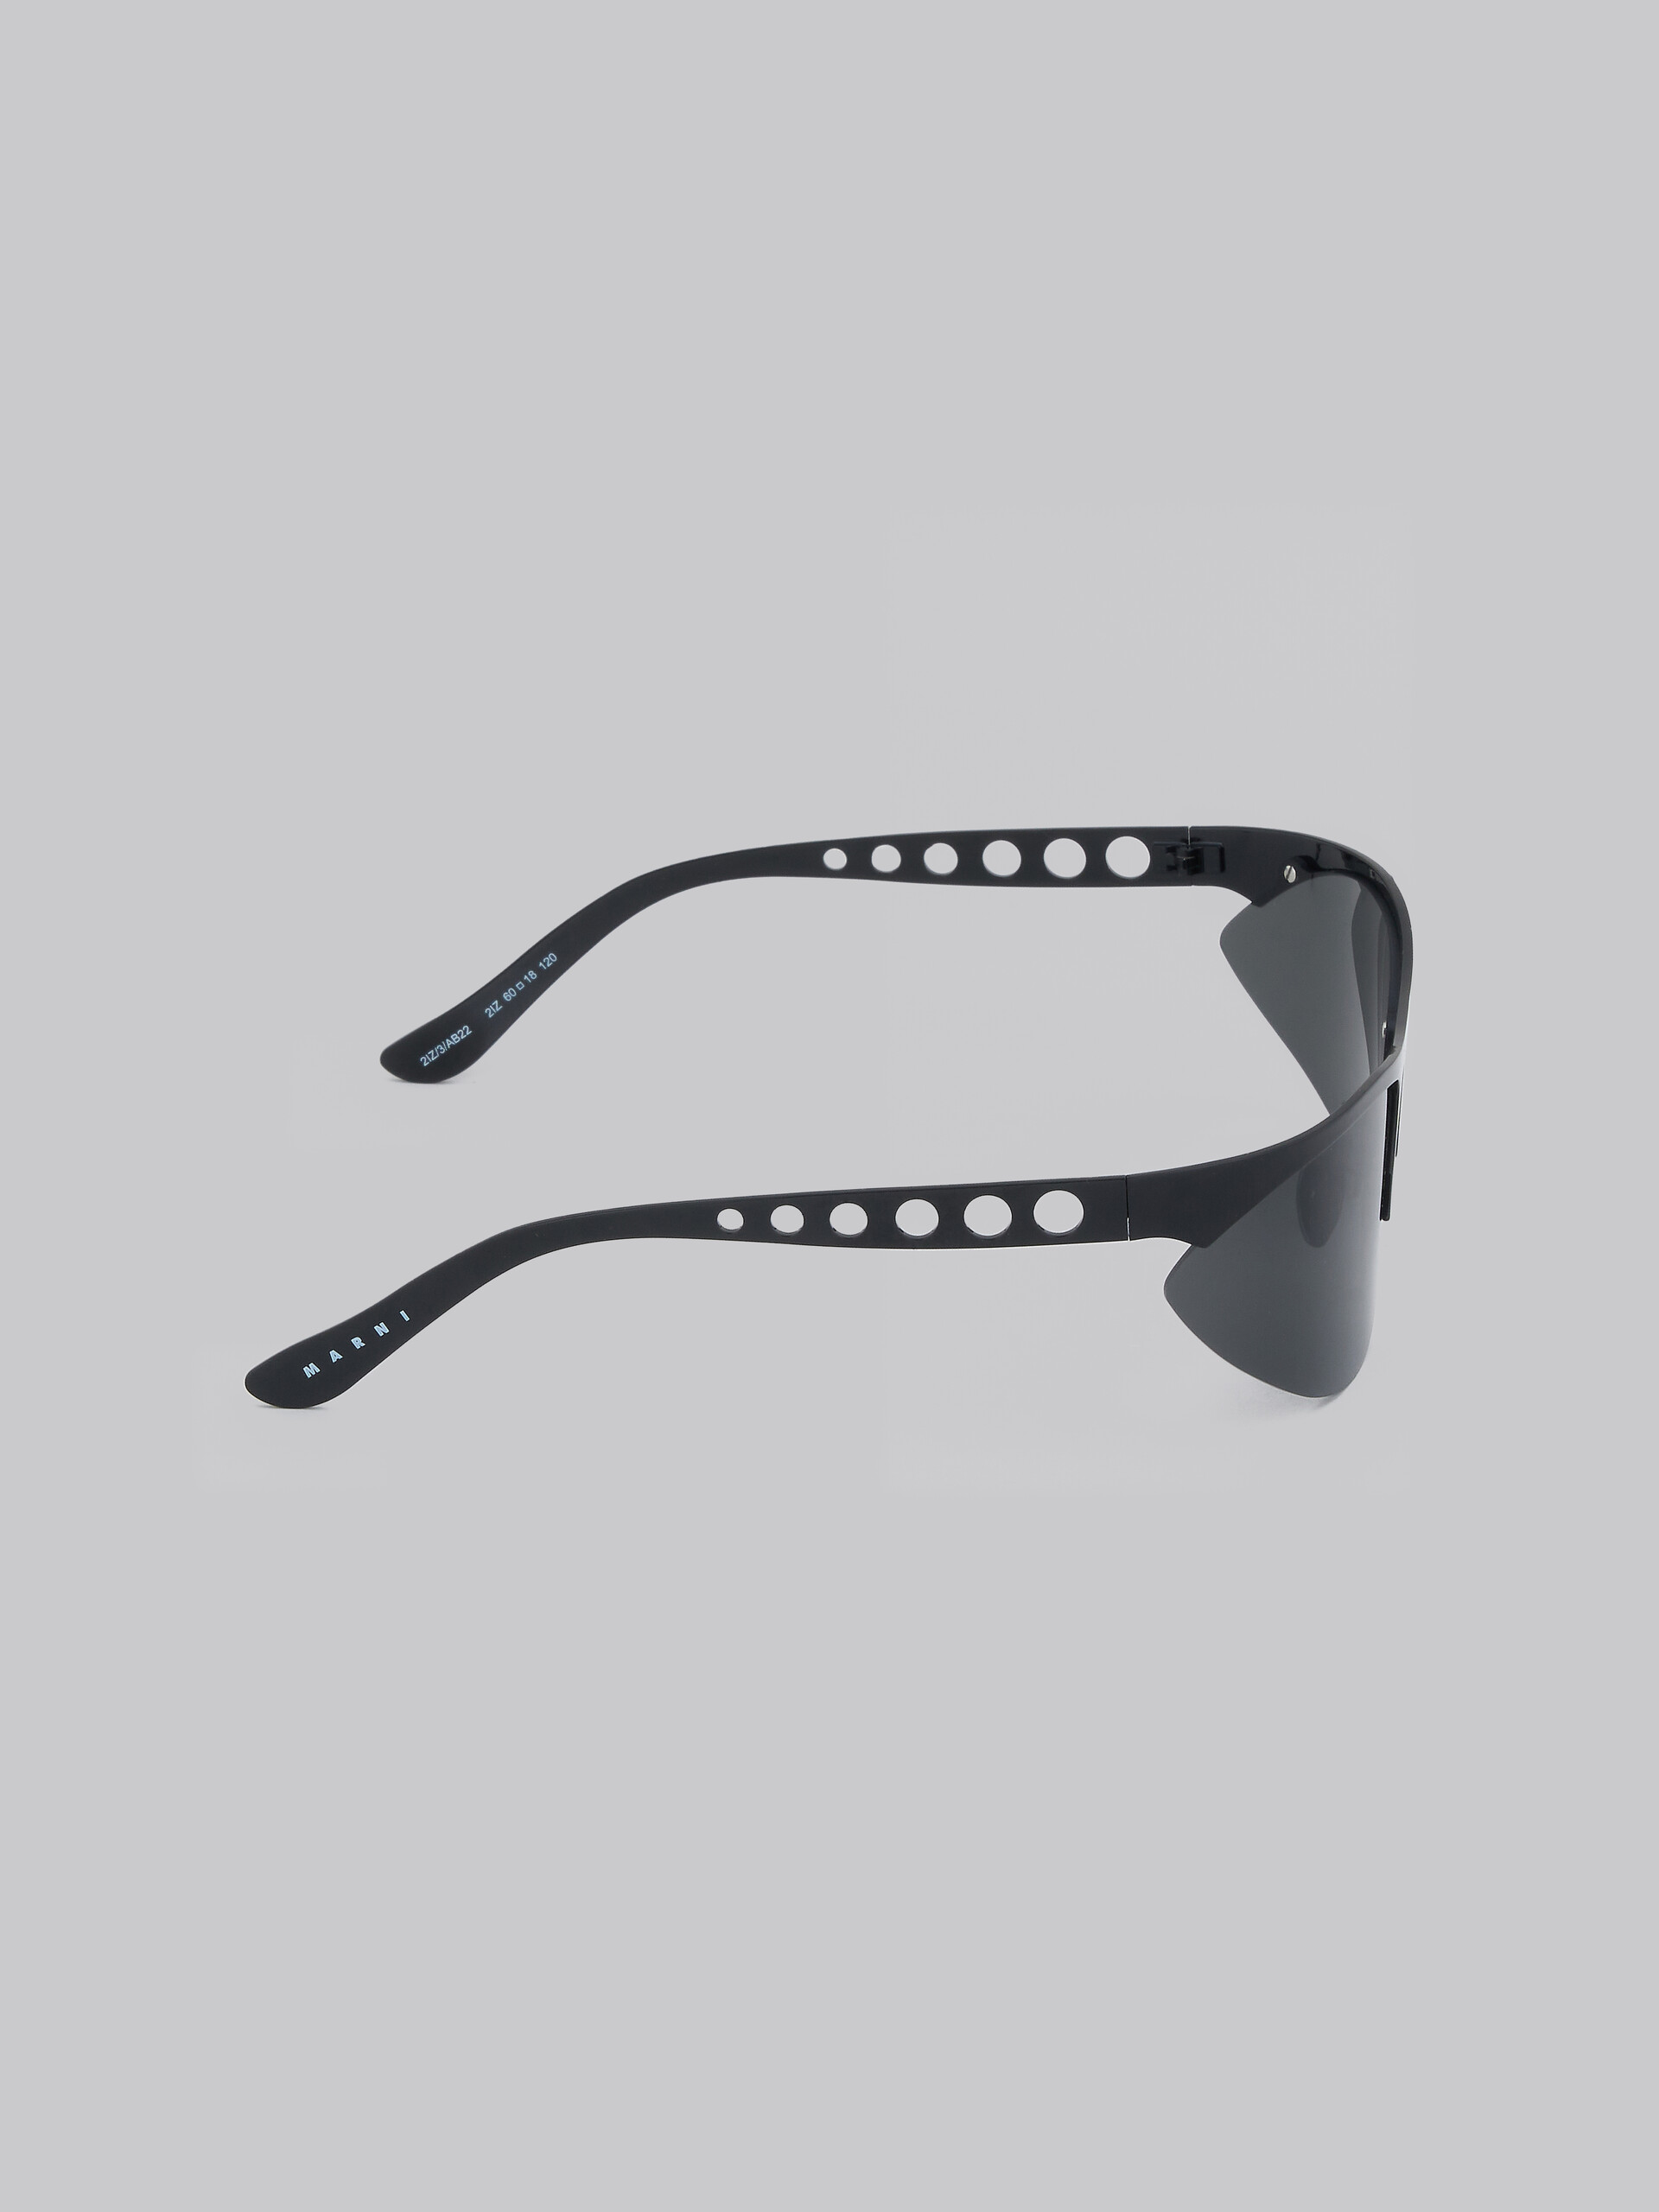 Black Salar De Uyuni metal sunglasses - Optical - Image 4